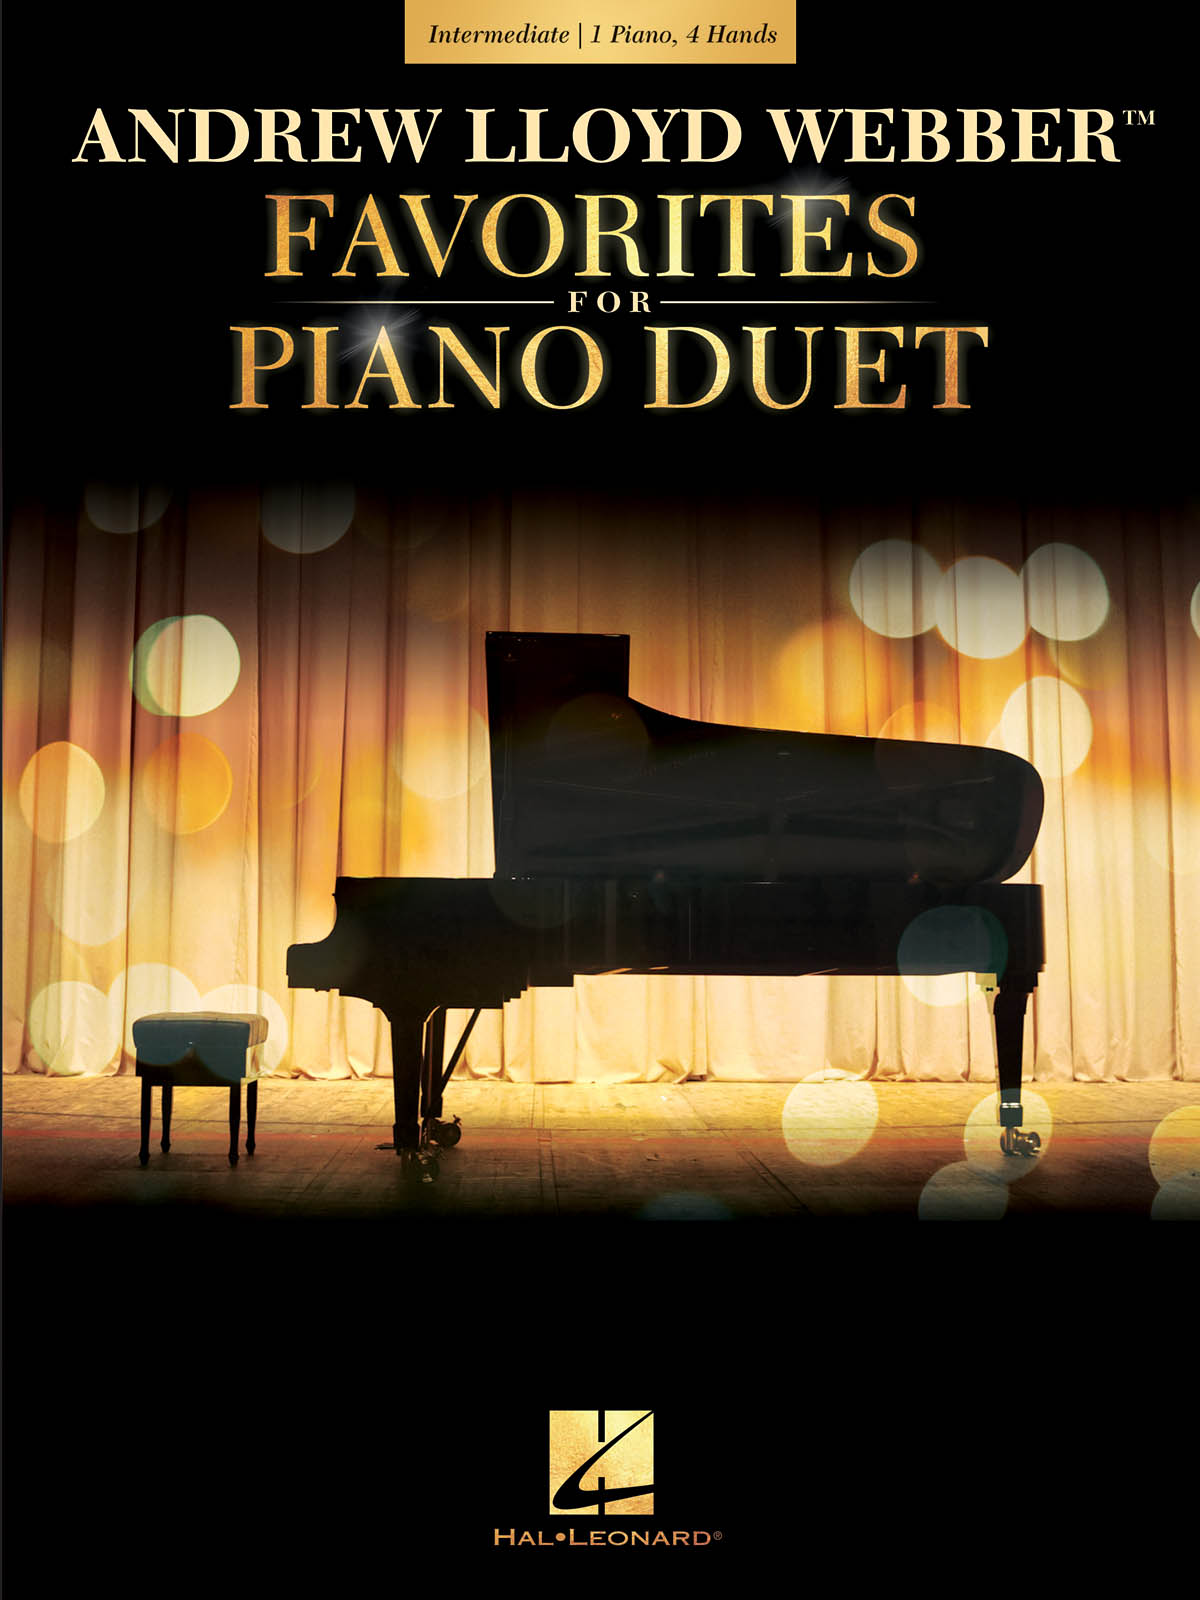 Andrew Lloyd Webber Favorites for Piano Duet - Early Intermediate Level